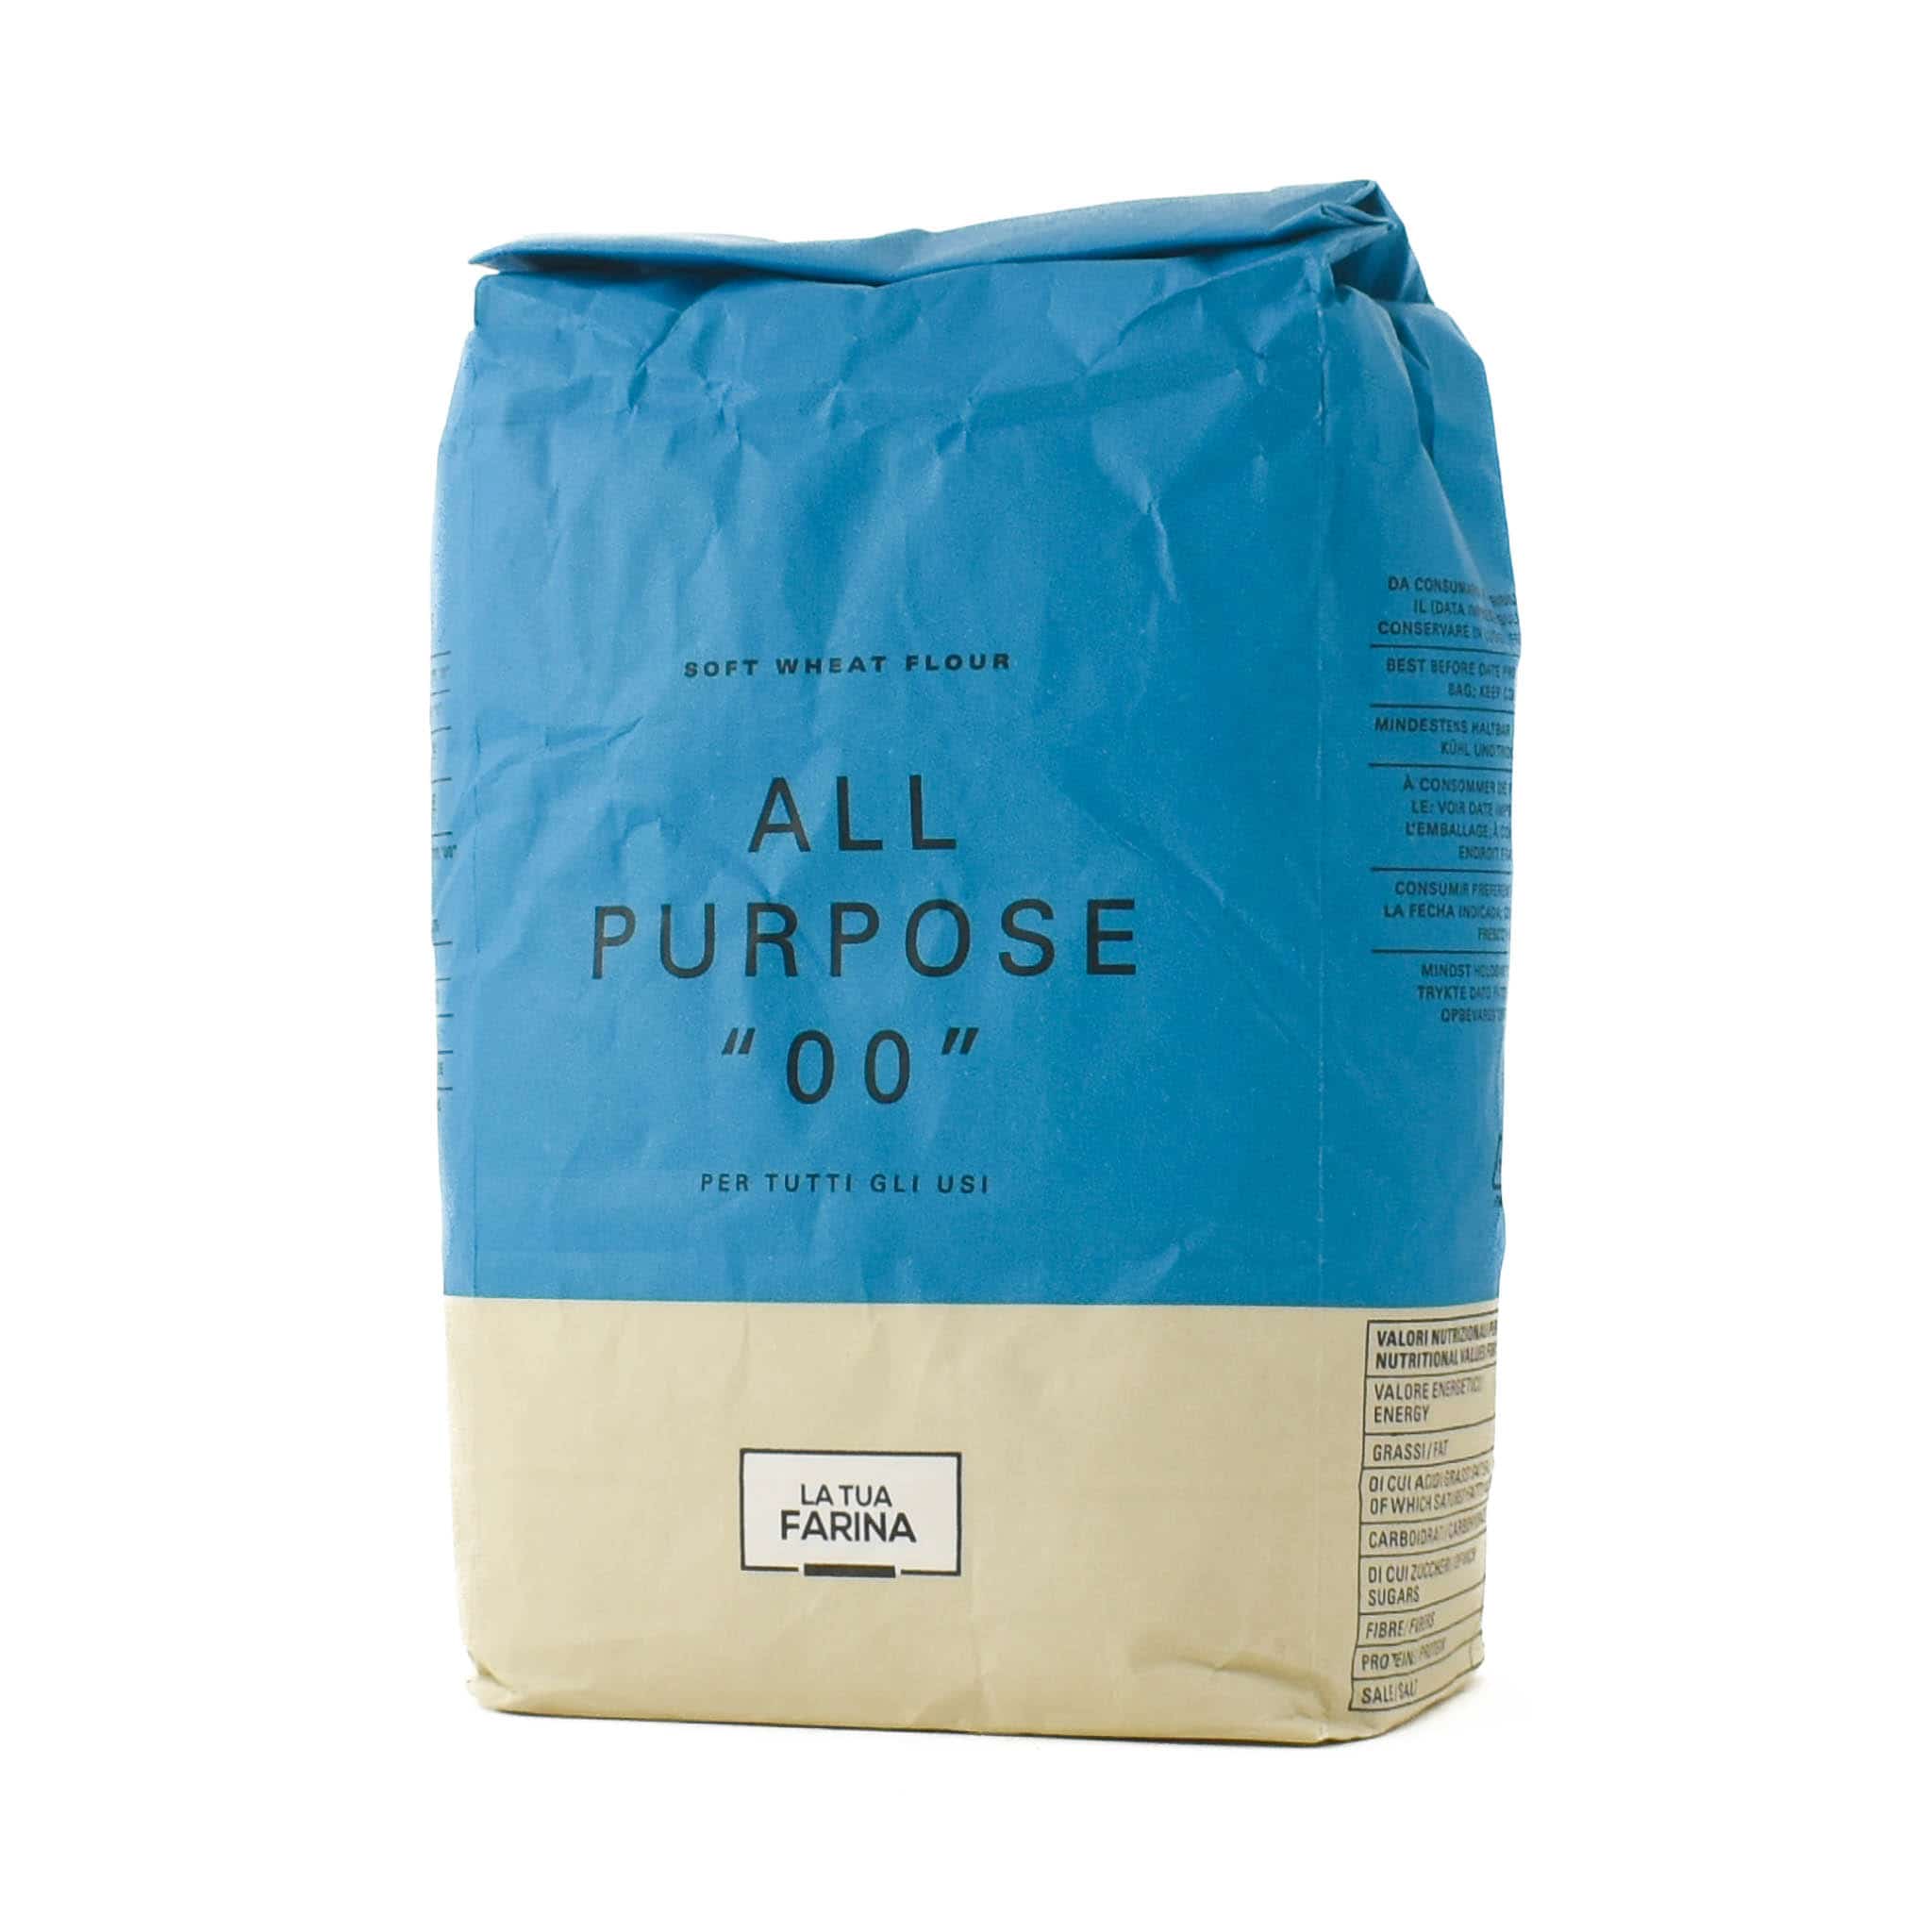 All Purpose Italian 00 Flour